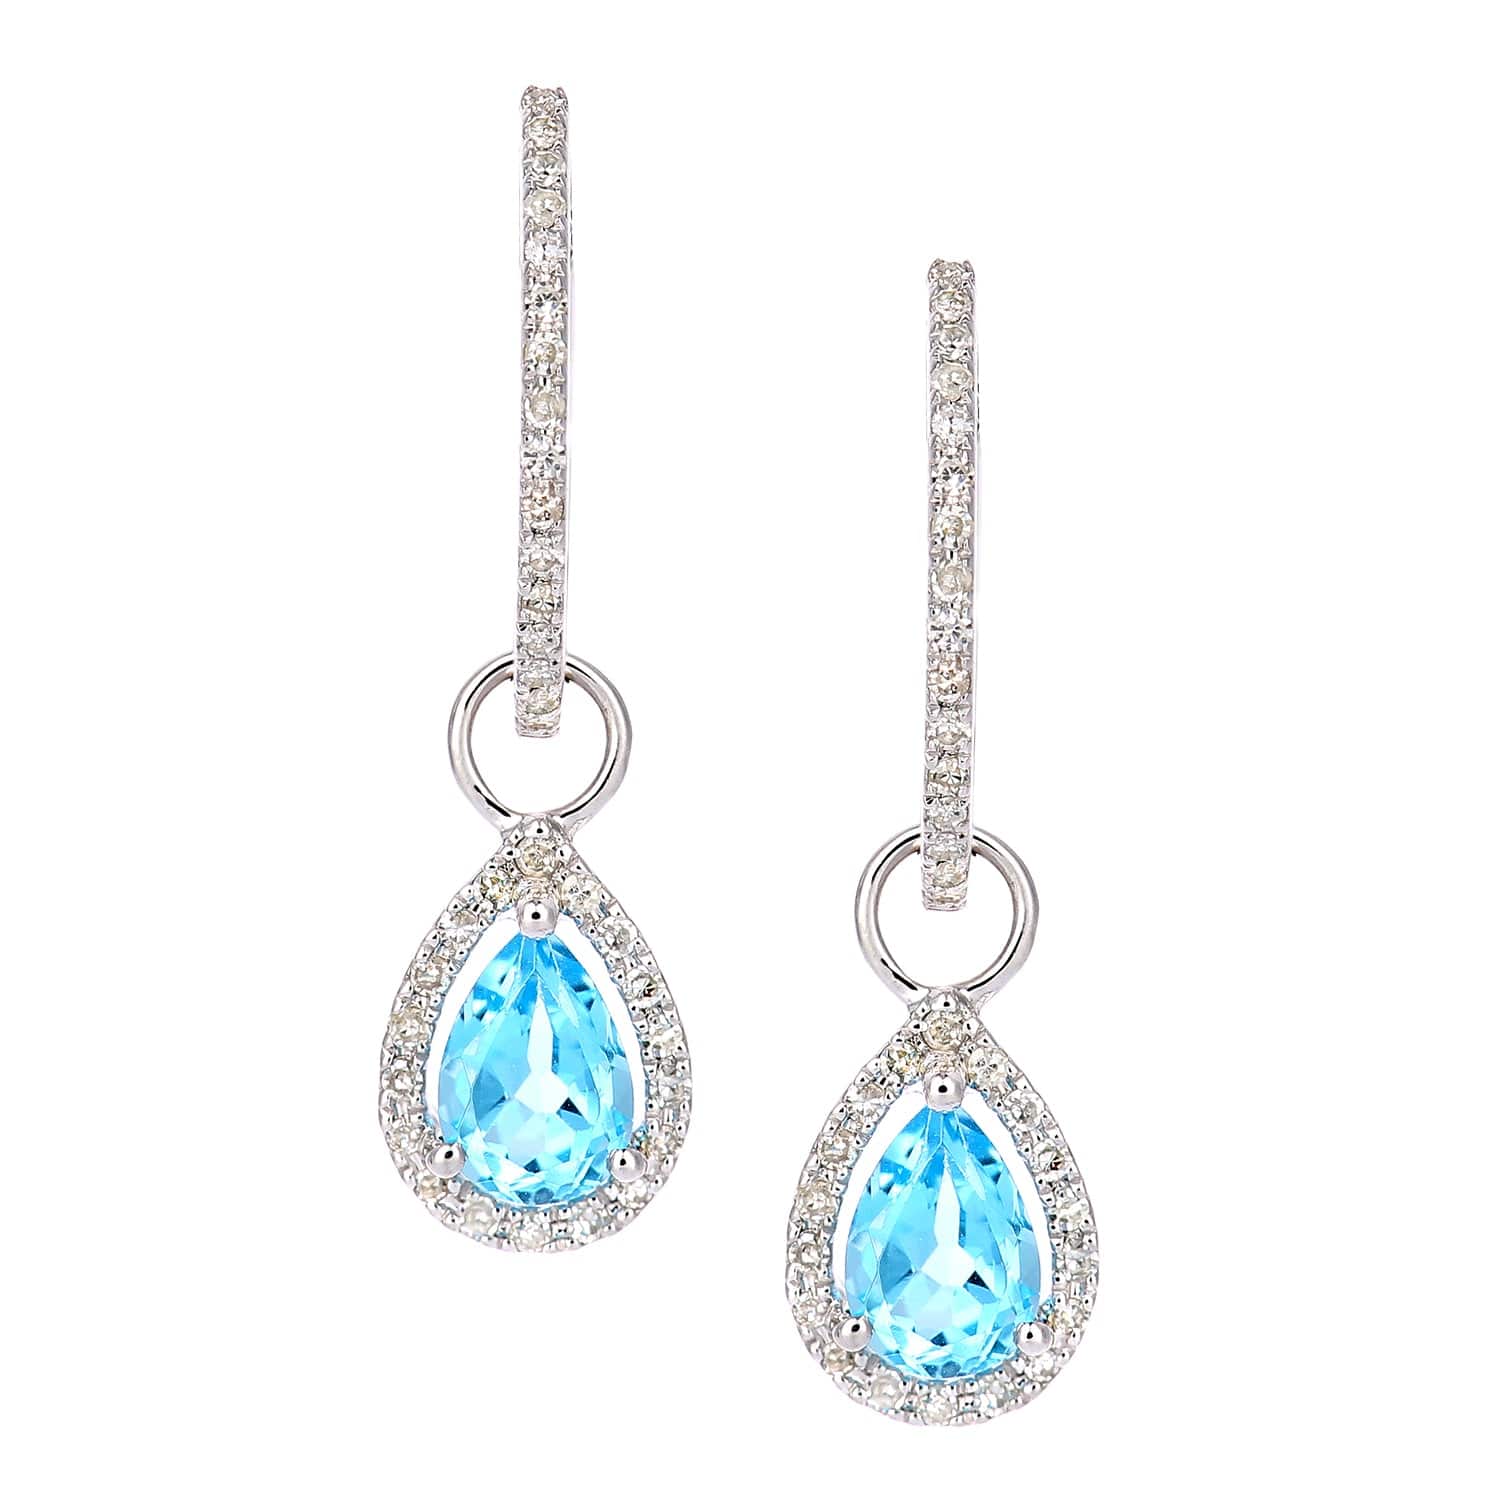 Lynora Luxe Earring White Gold 9ct / Blue Topaz 9ct White Gold Blue Topaz Teardrop and Diamond Halo Earrings